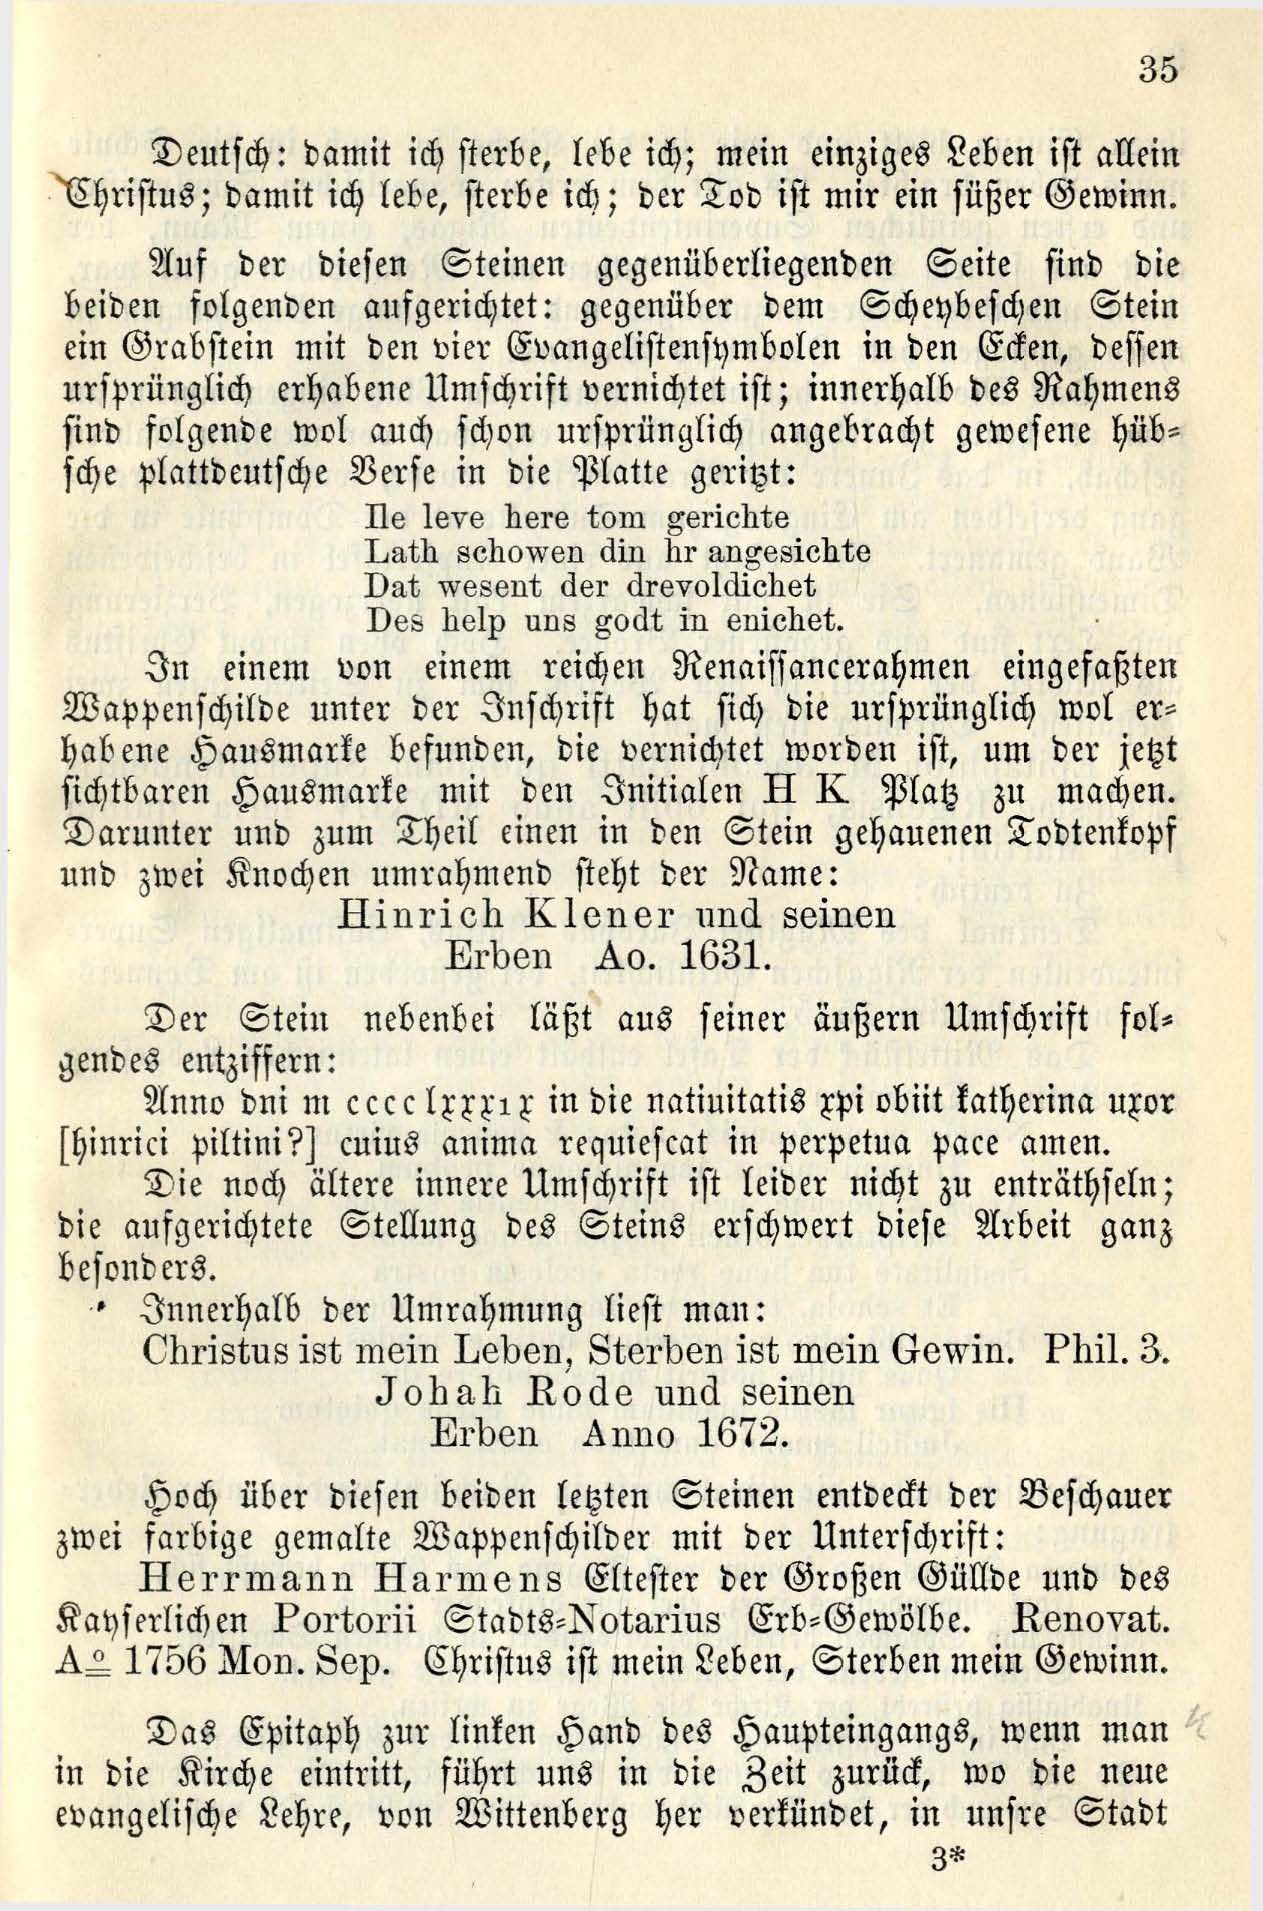 Denkmäler im Dom zu Riga (1885) | 36. Main body of text